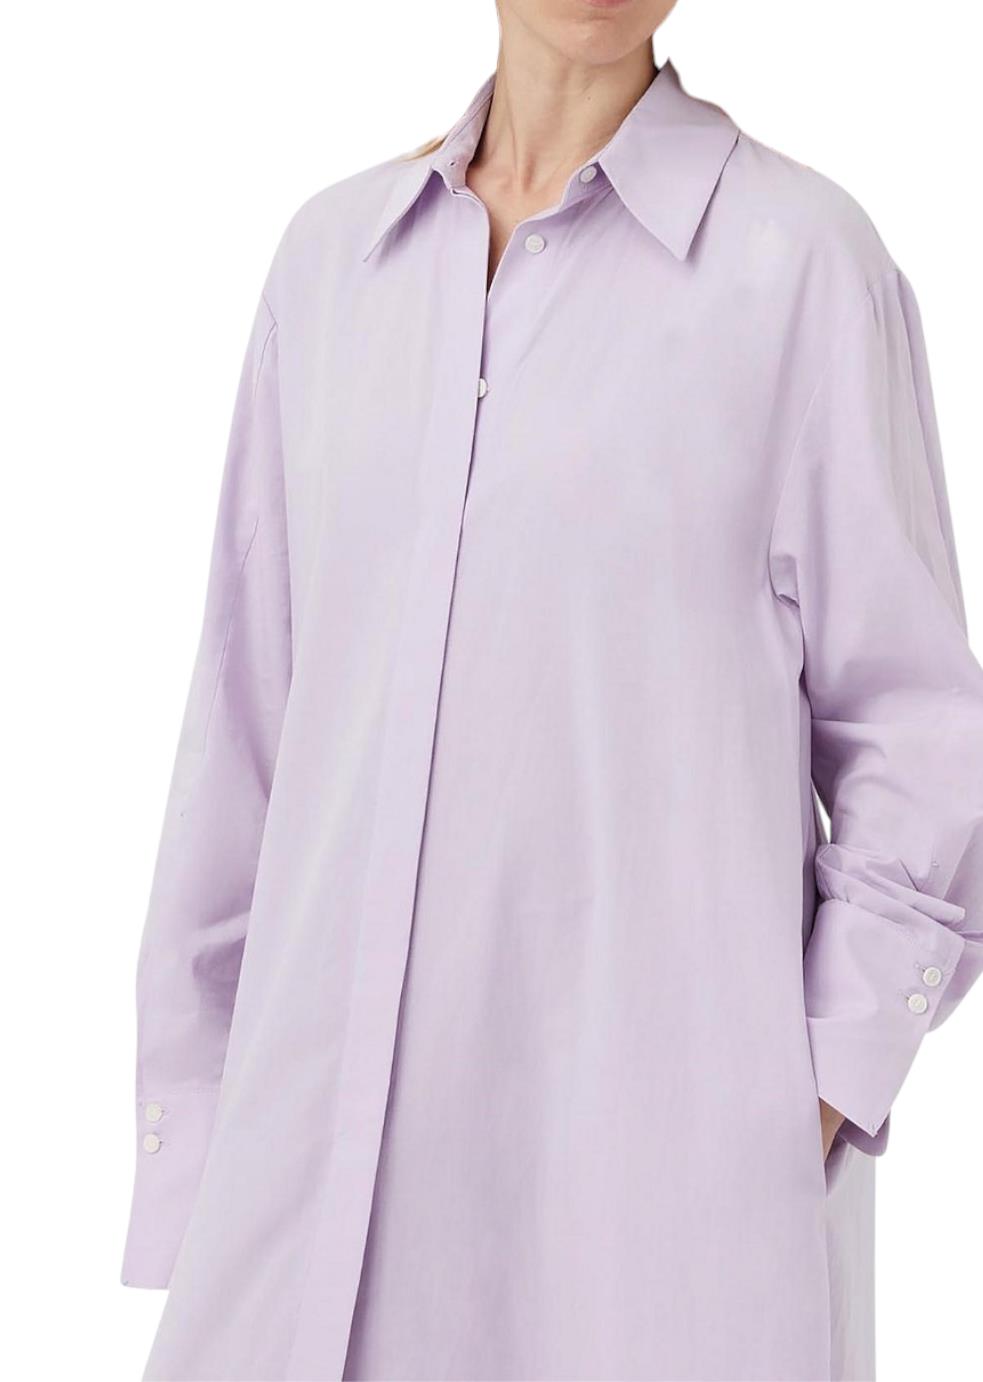 CAMILLA AND MARC Antonella Maxi Dress | Lilac Shirt, Side Slits, Cotton blend